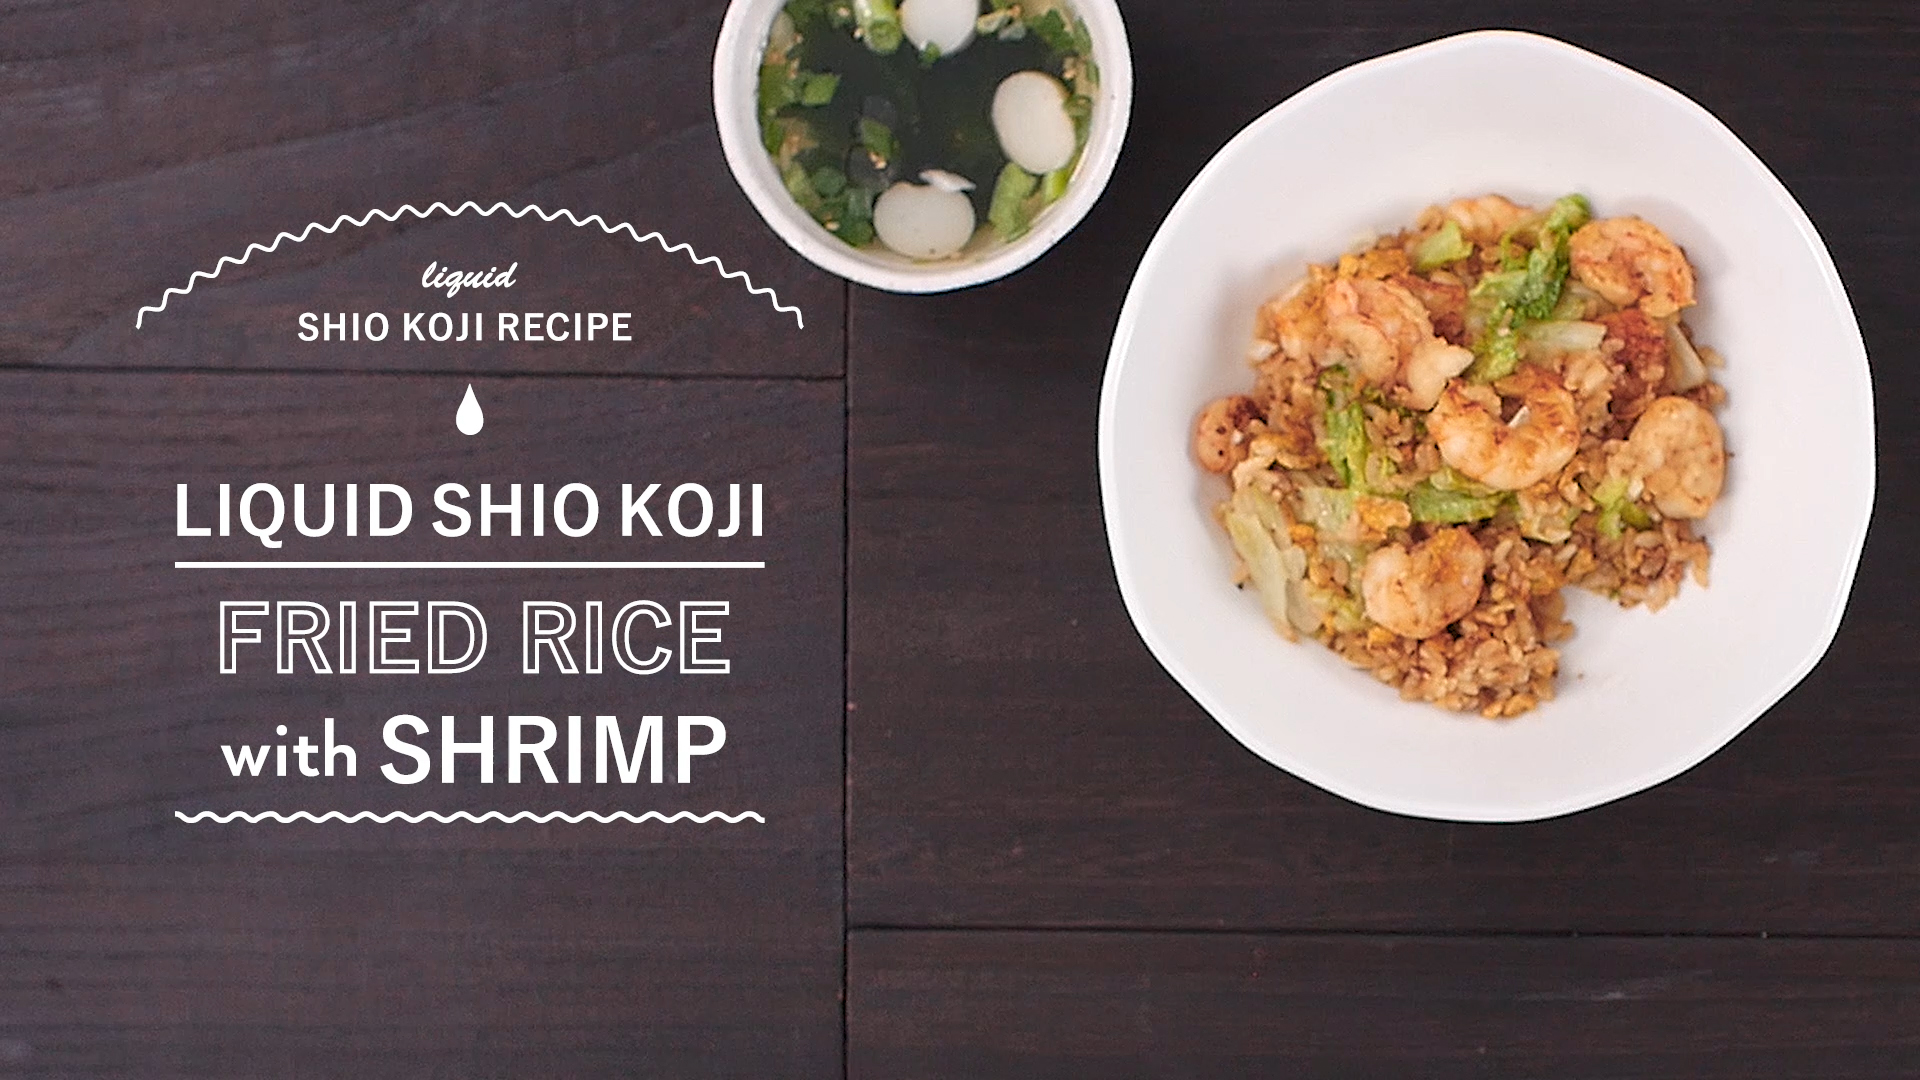 【LIQUID SHIO KOJI RECIPE FRIED RICE WITH SHRIMP】 Use Liquid Shio Koji = Authentic Taste!